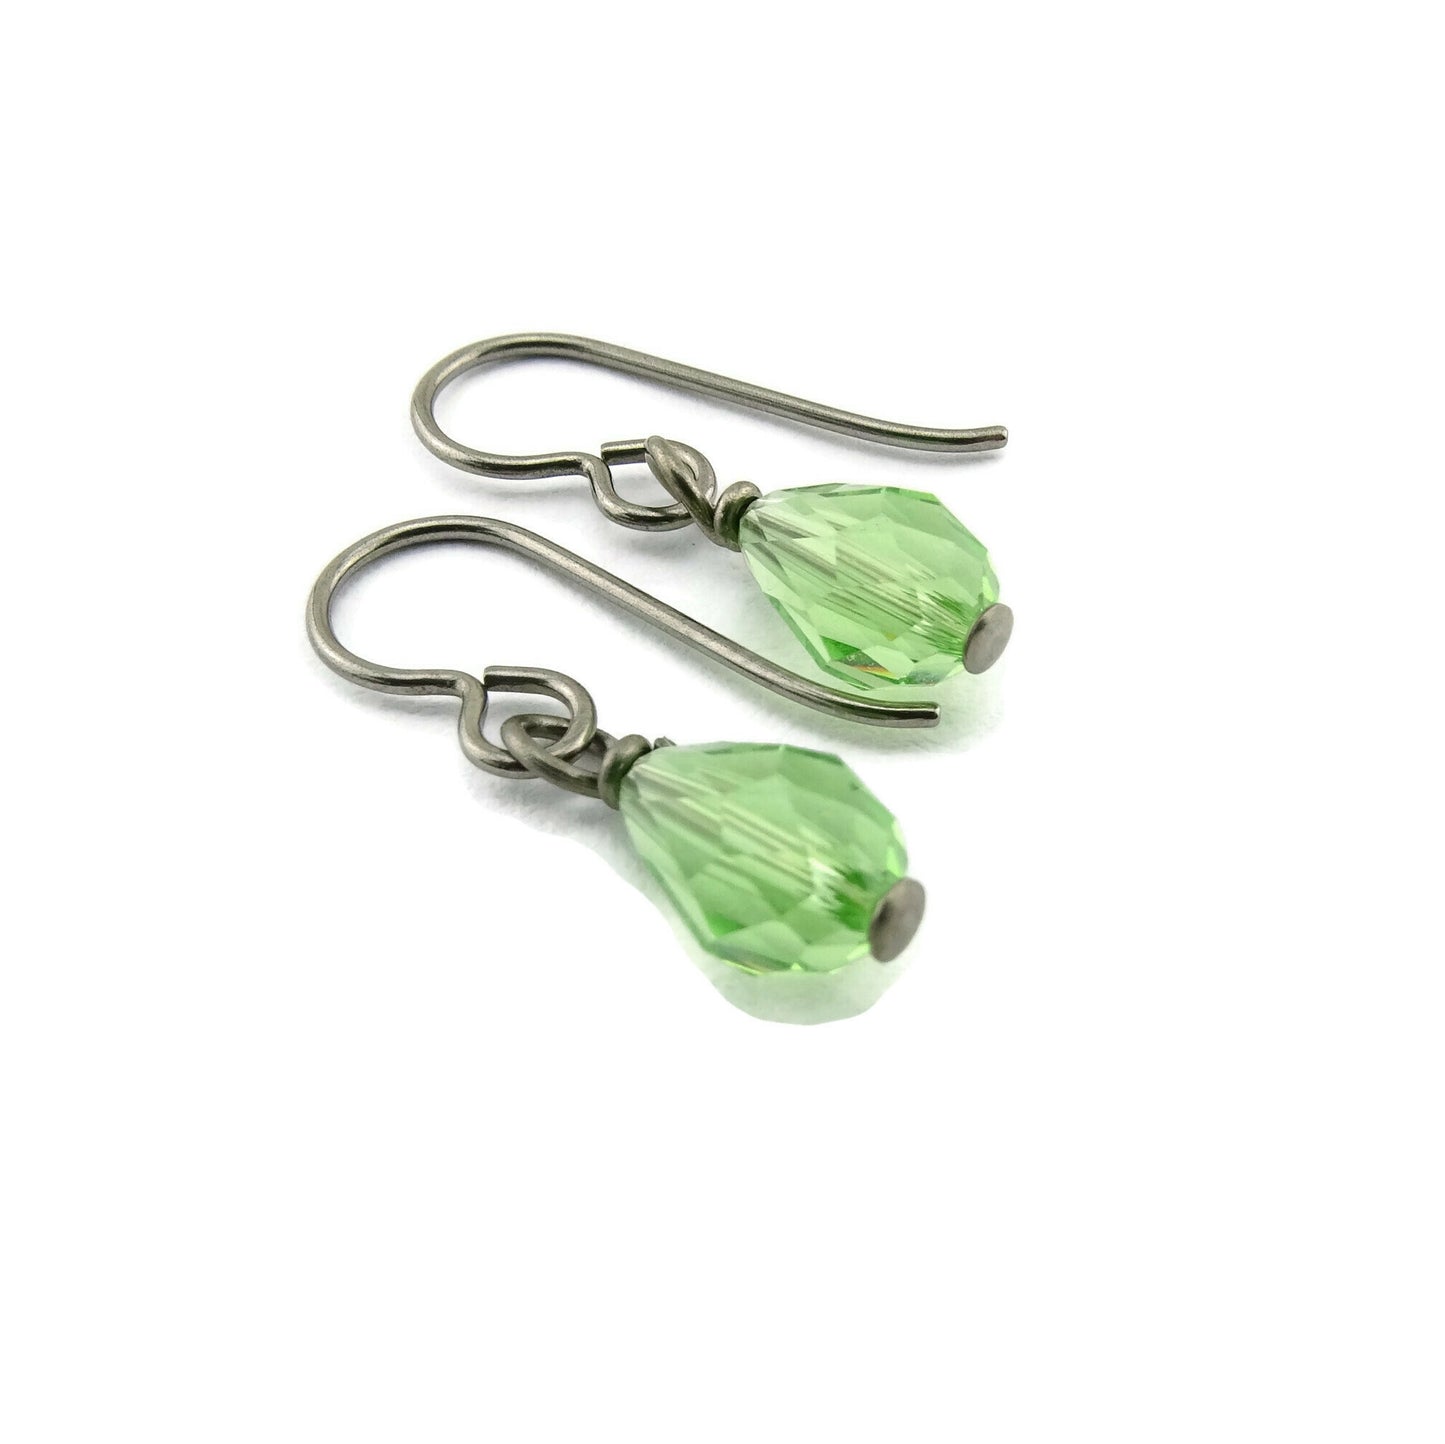 Peridot Green Drop Niobium Earring, Swarovski Crystal Teardrop Earrings for Sensitive Ears, Hypoallergenic Nickel Free Titanium Earrings